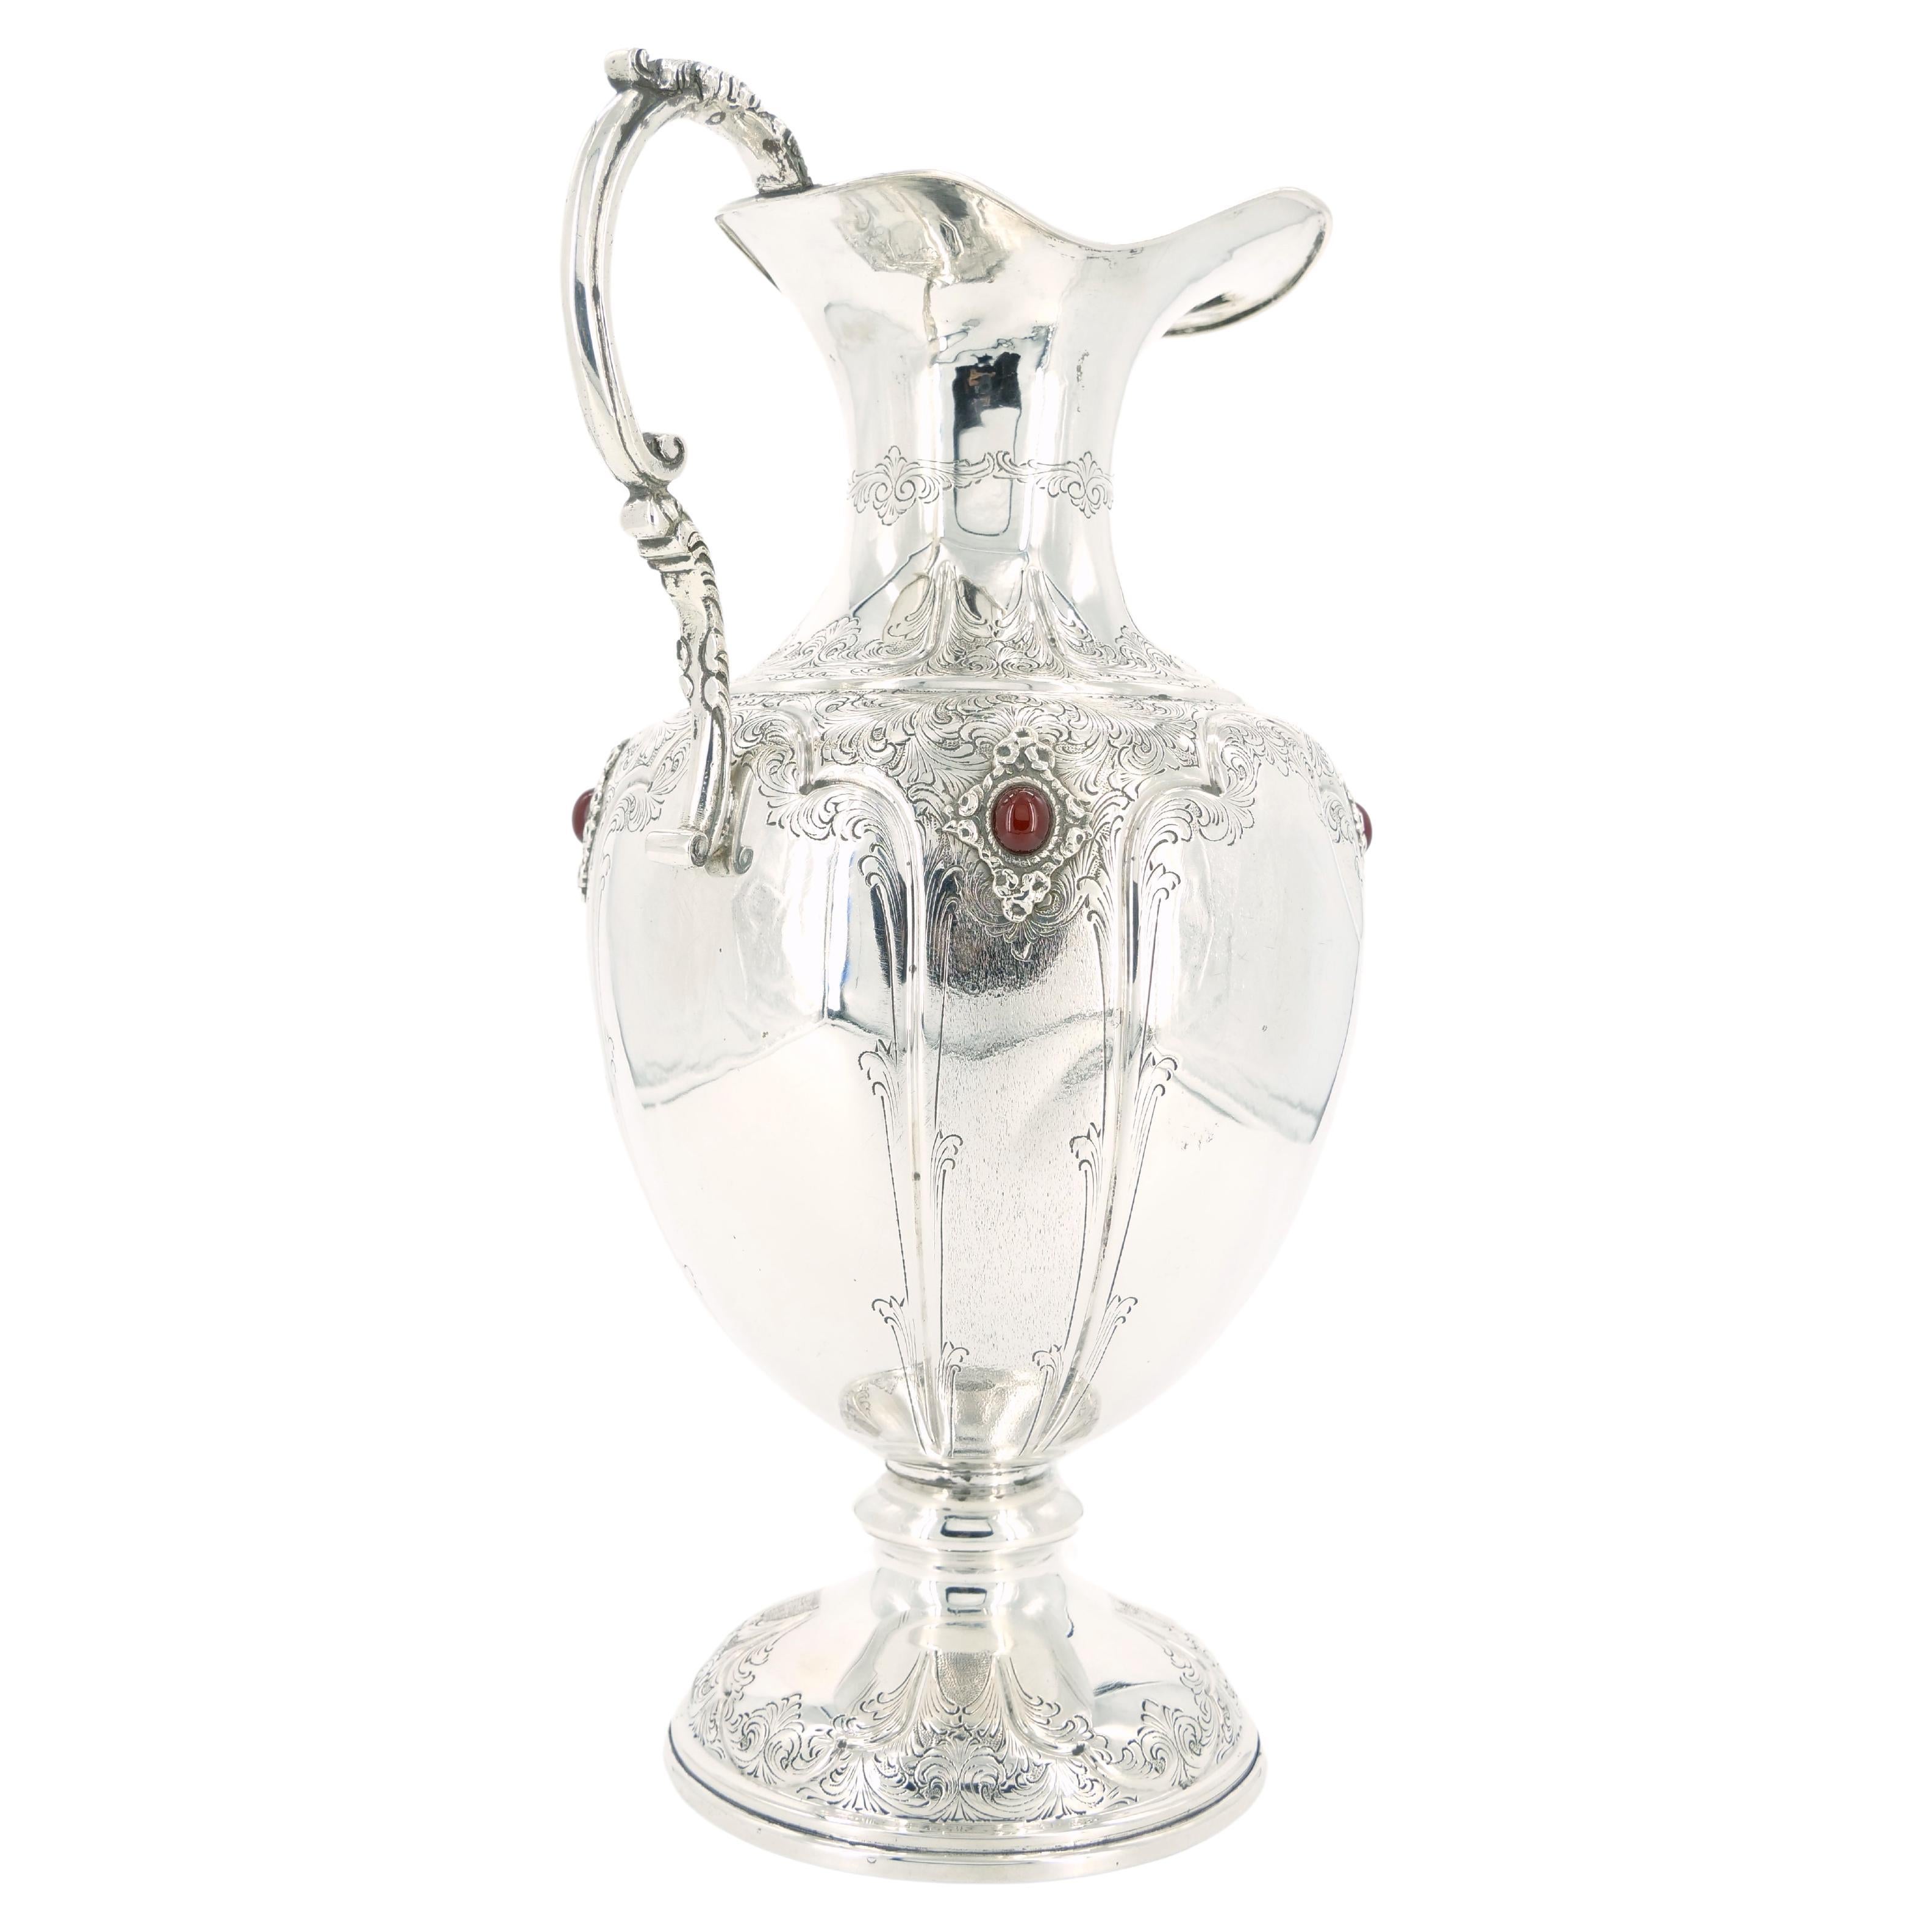 Italian Sterling Silver / Precious Stone One Handled Decorative Vase / Piece